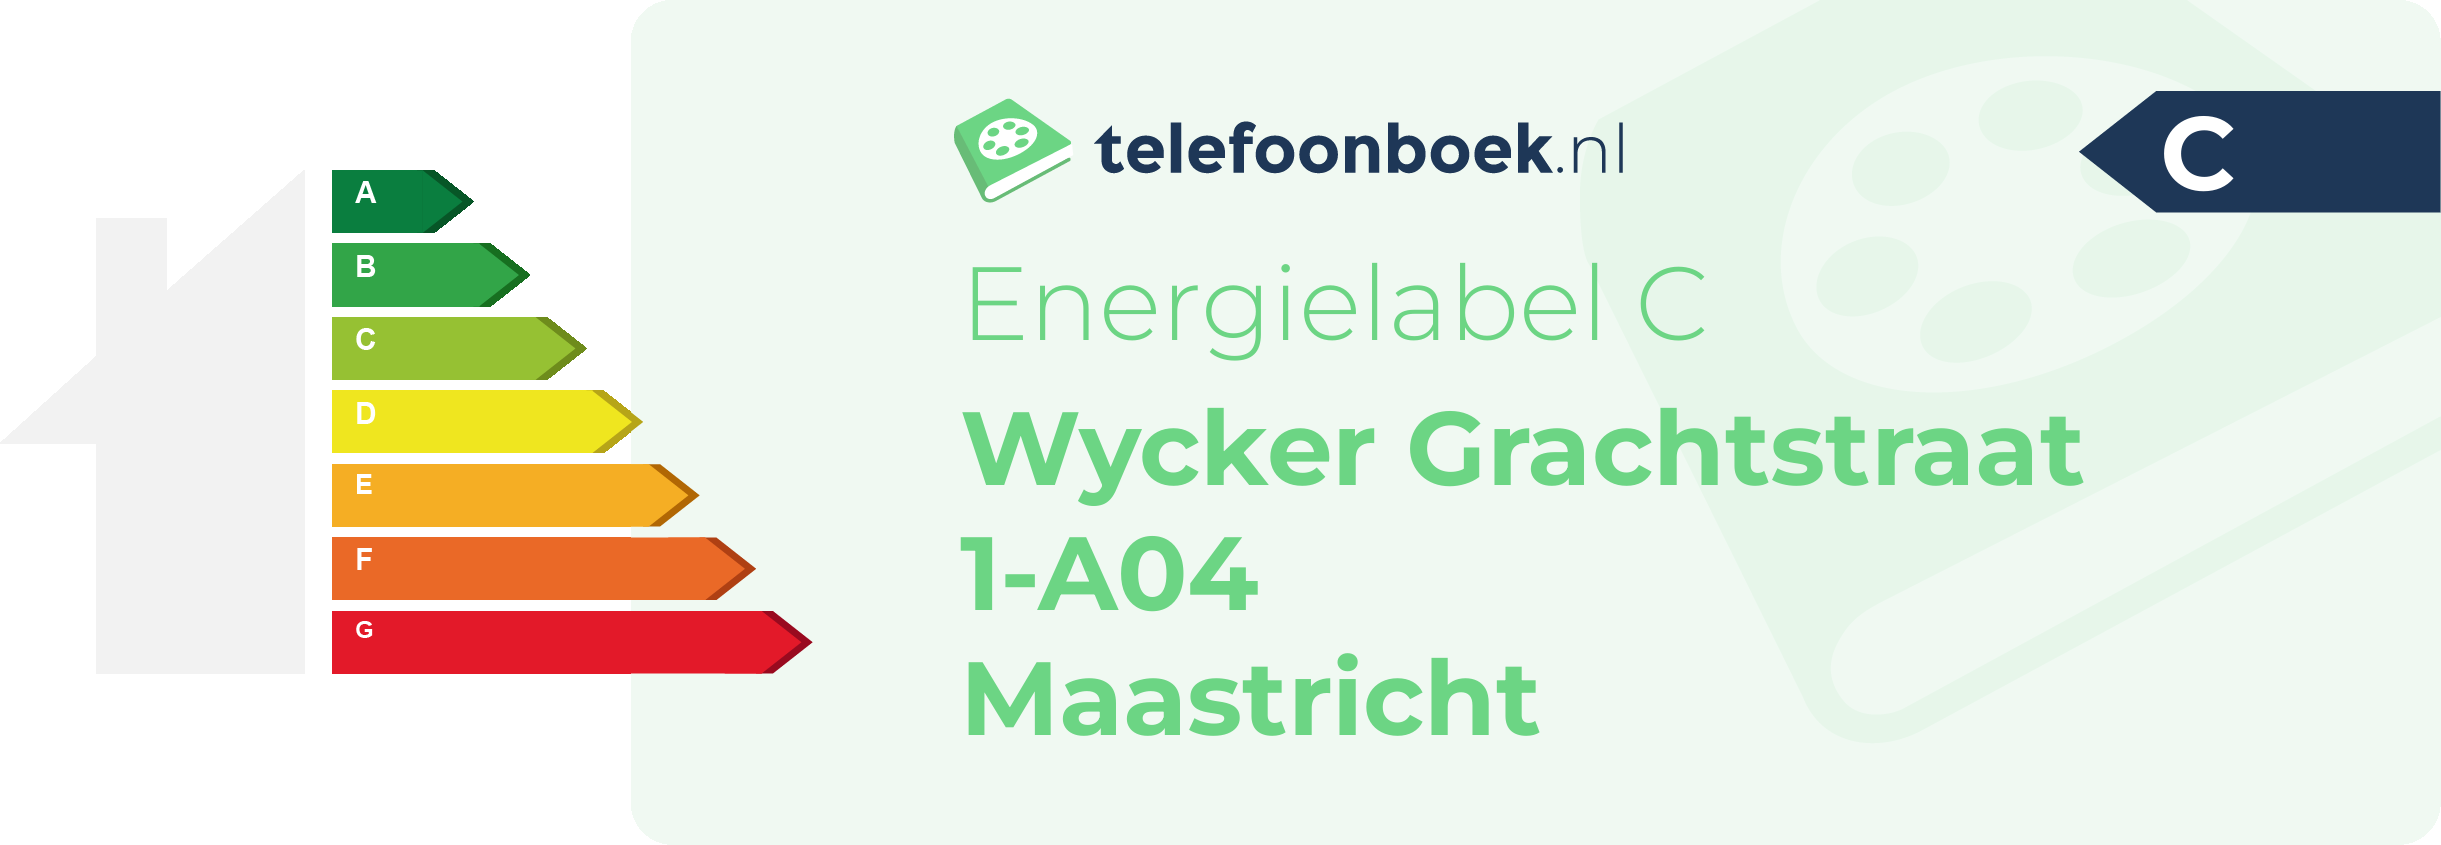 Energielabel Wycker Grachtstraat 1-A04 Maastricht